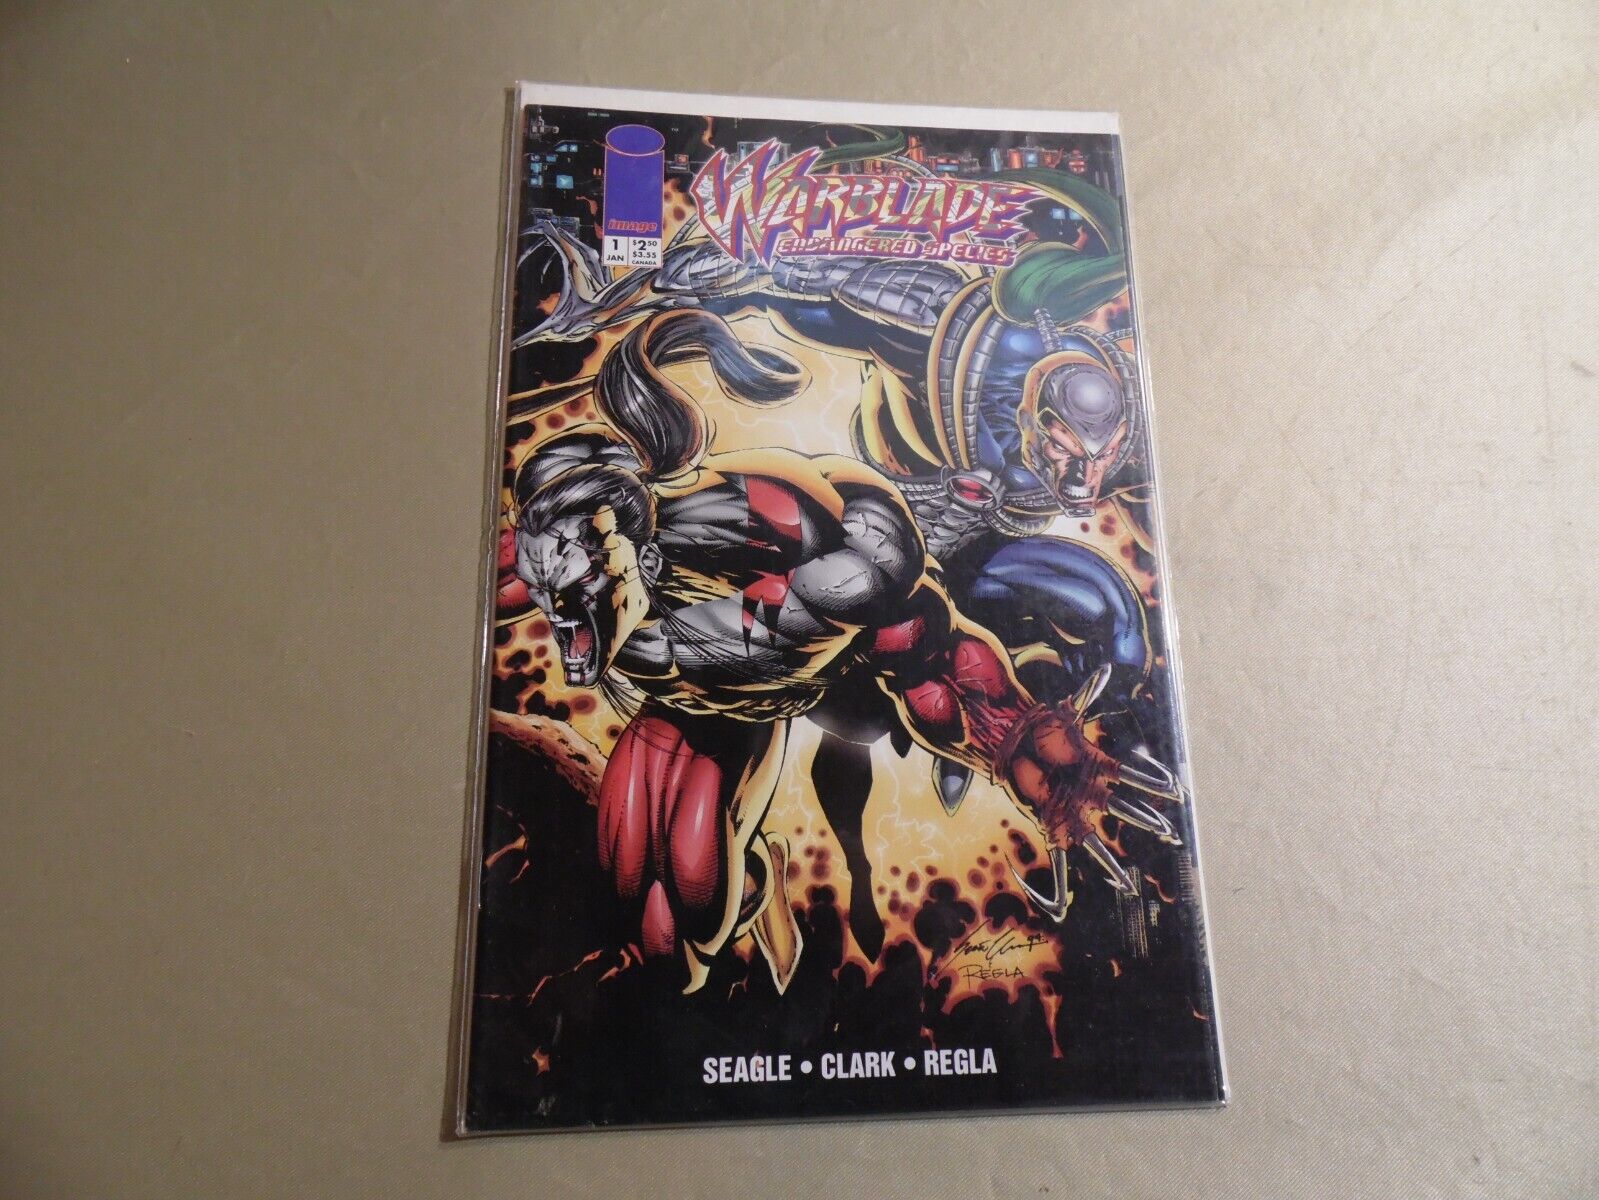 Warblade #1 (Image Comics 1995) Free Domestic Shipping